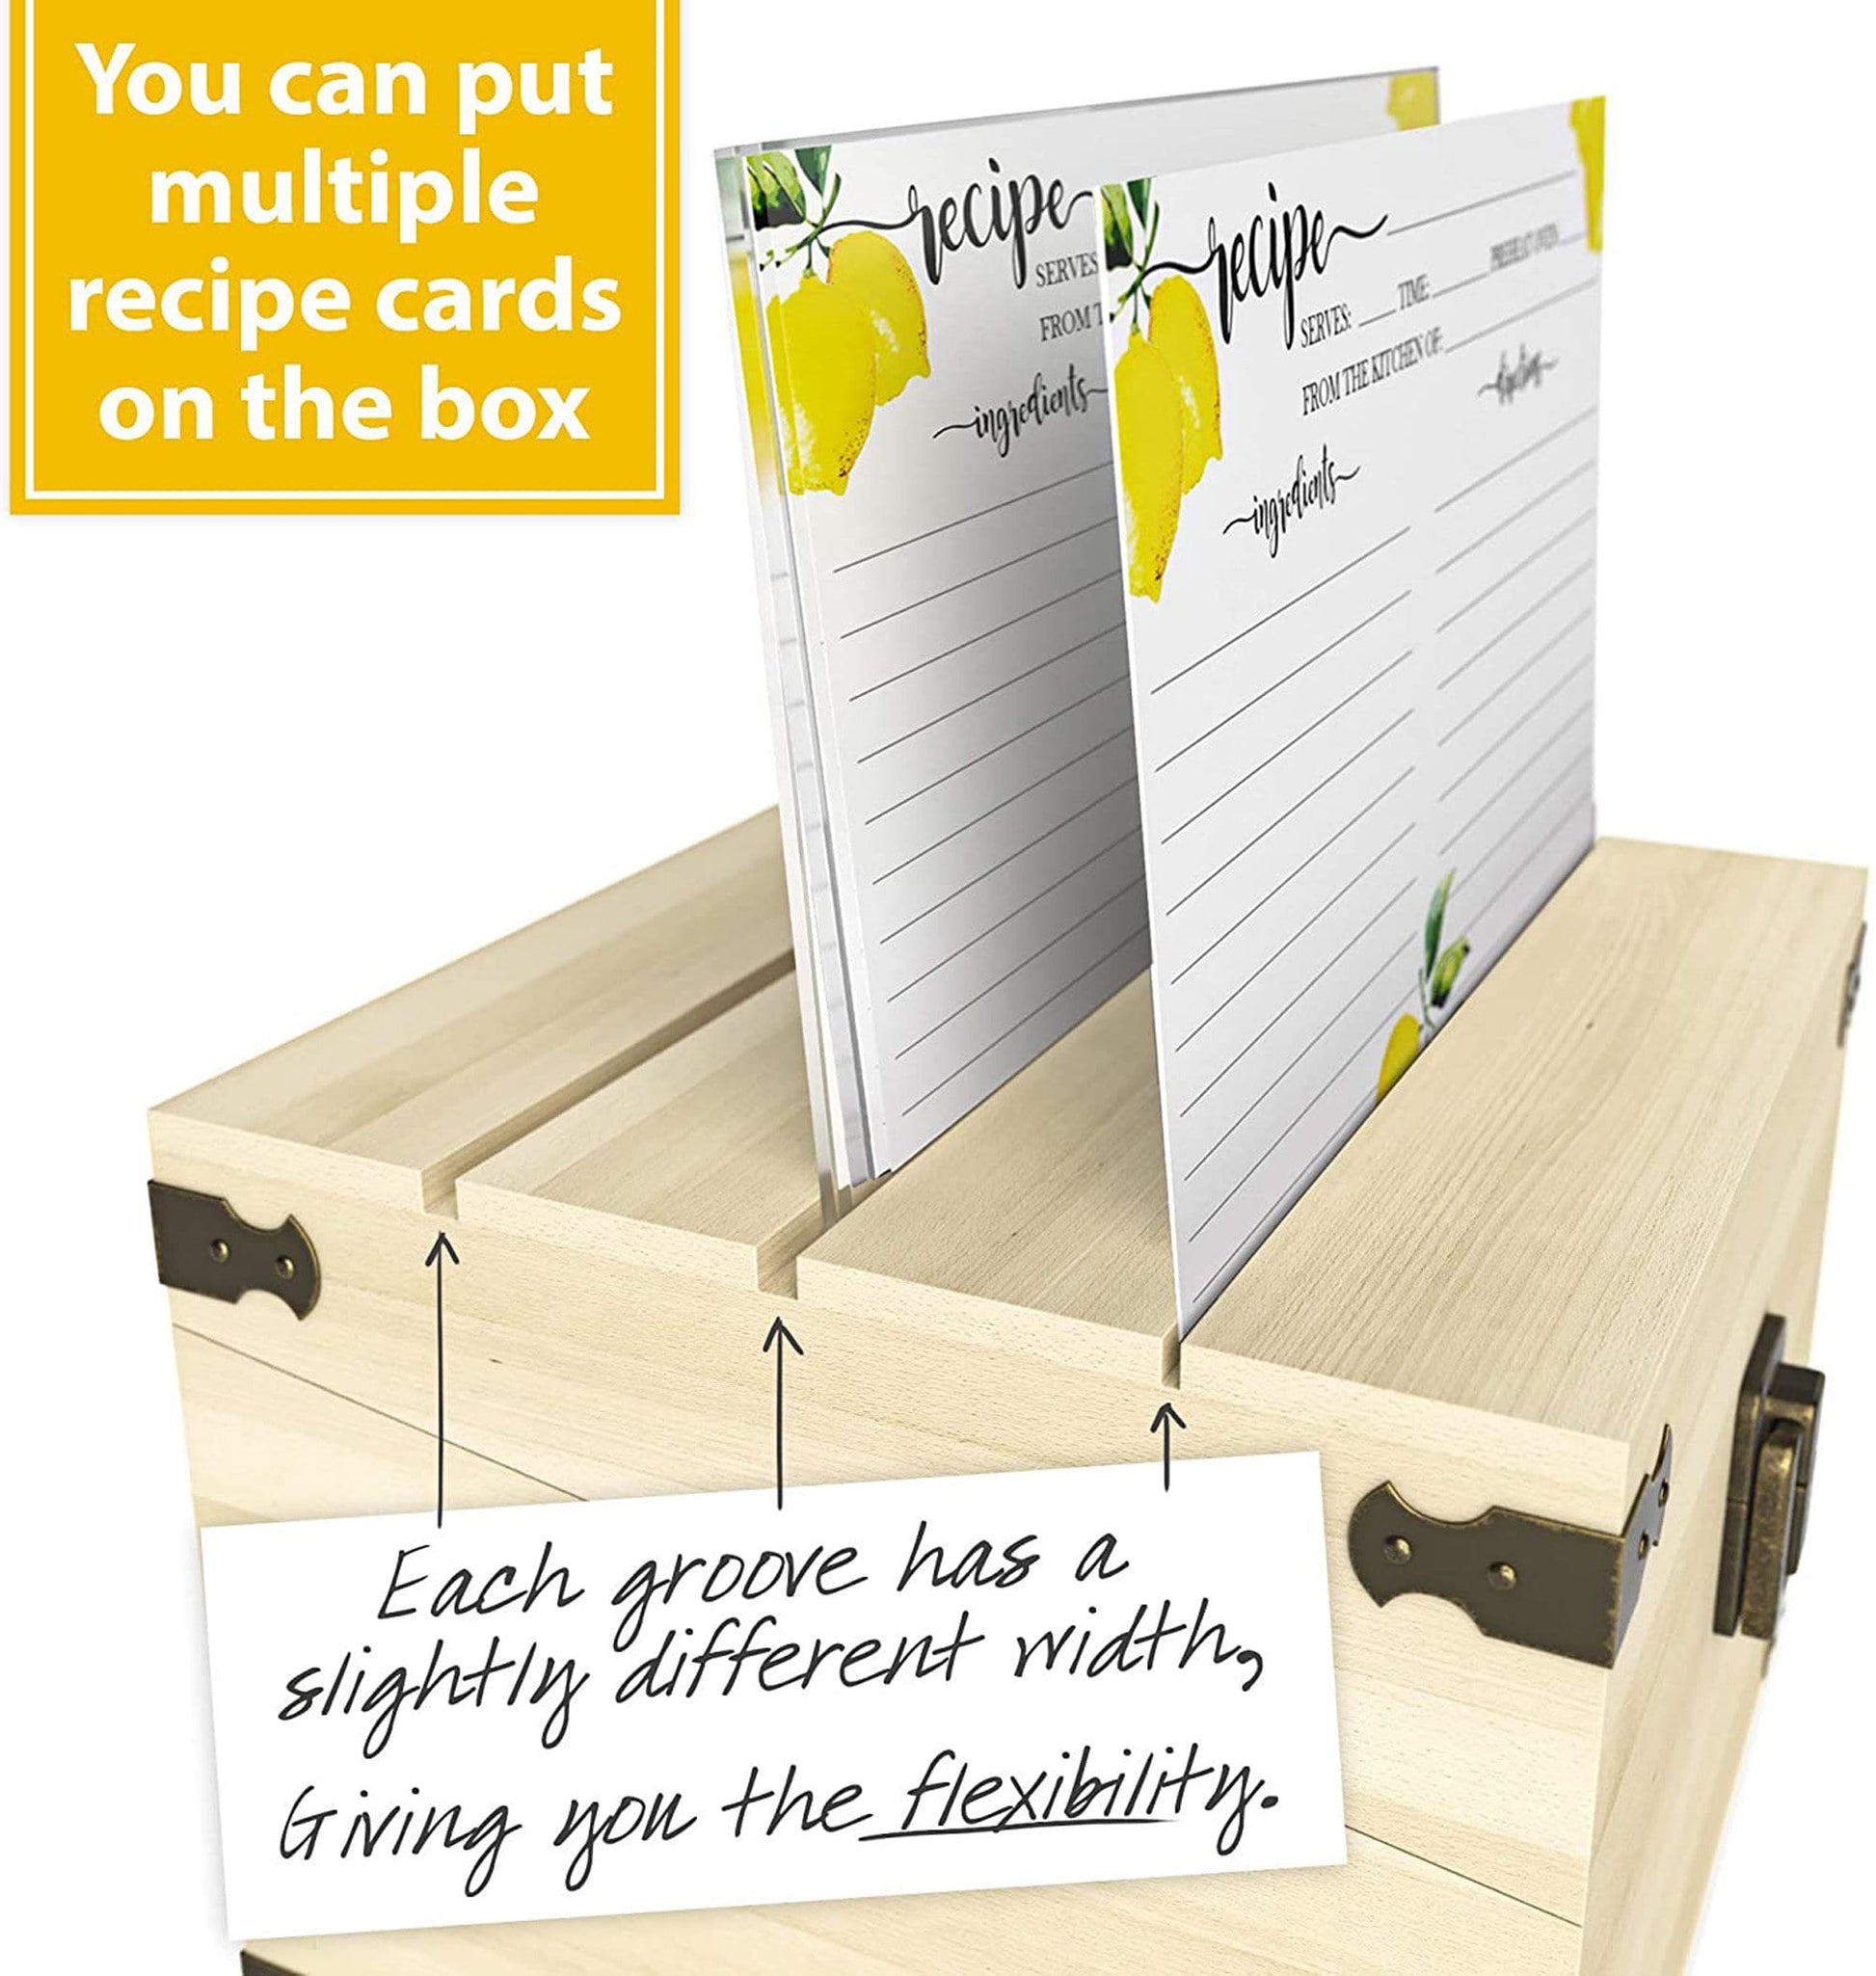 Rustic Pine Wood Storage Box - 4" x 6" Recipe Box | Wooden Kitchen Storage Chest for 200+ Index Cards